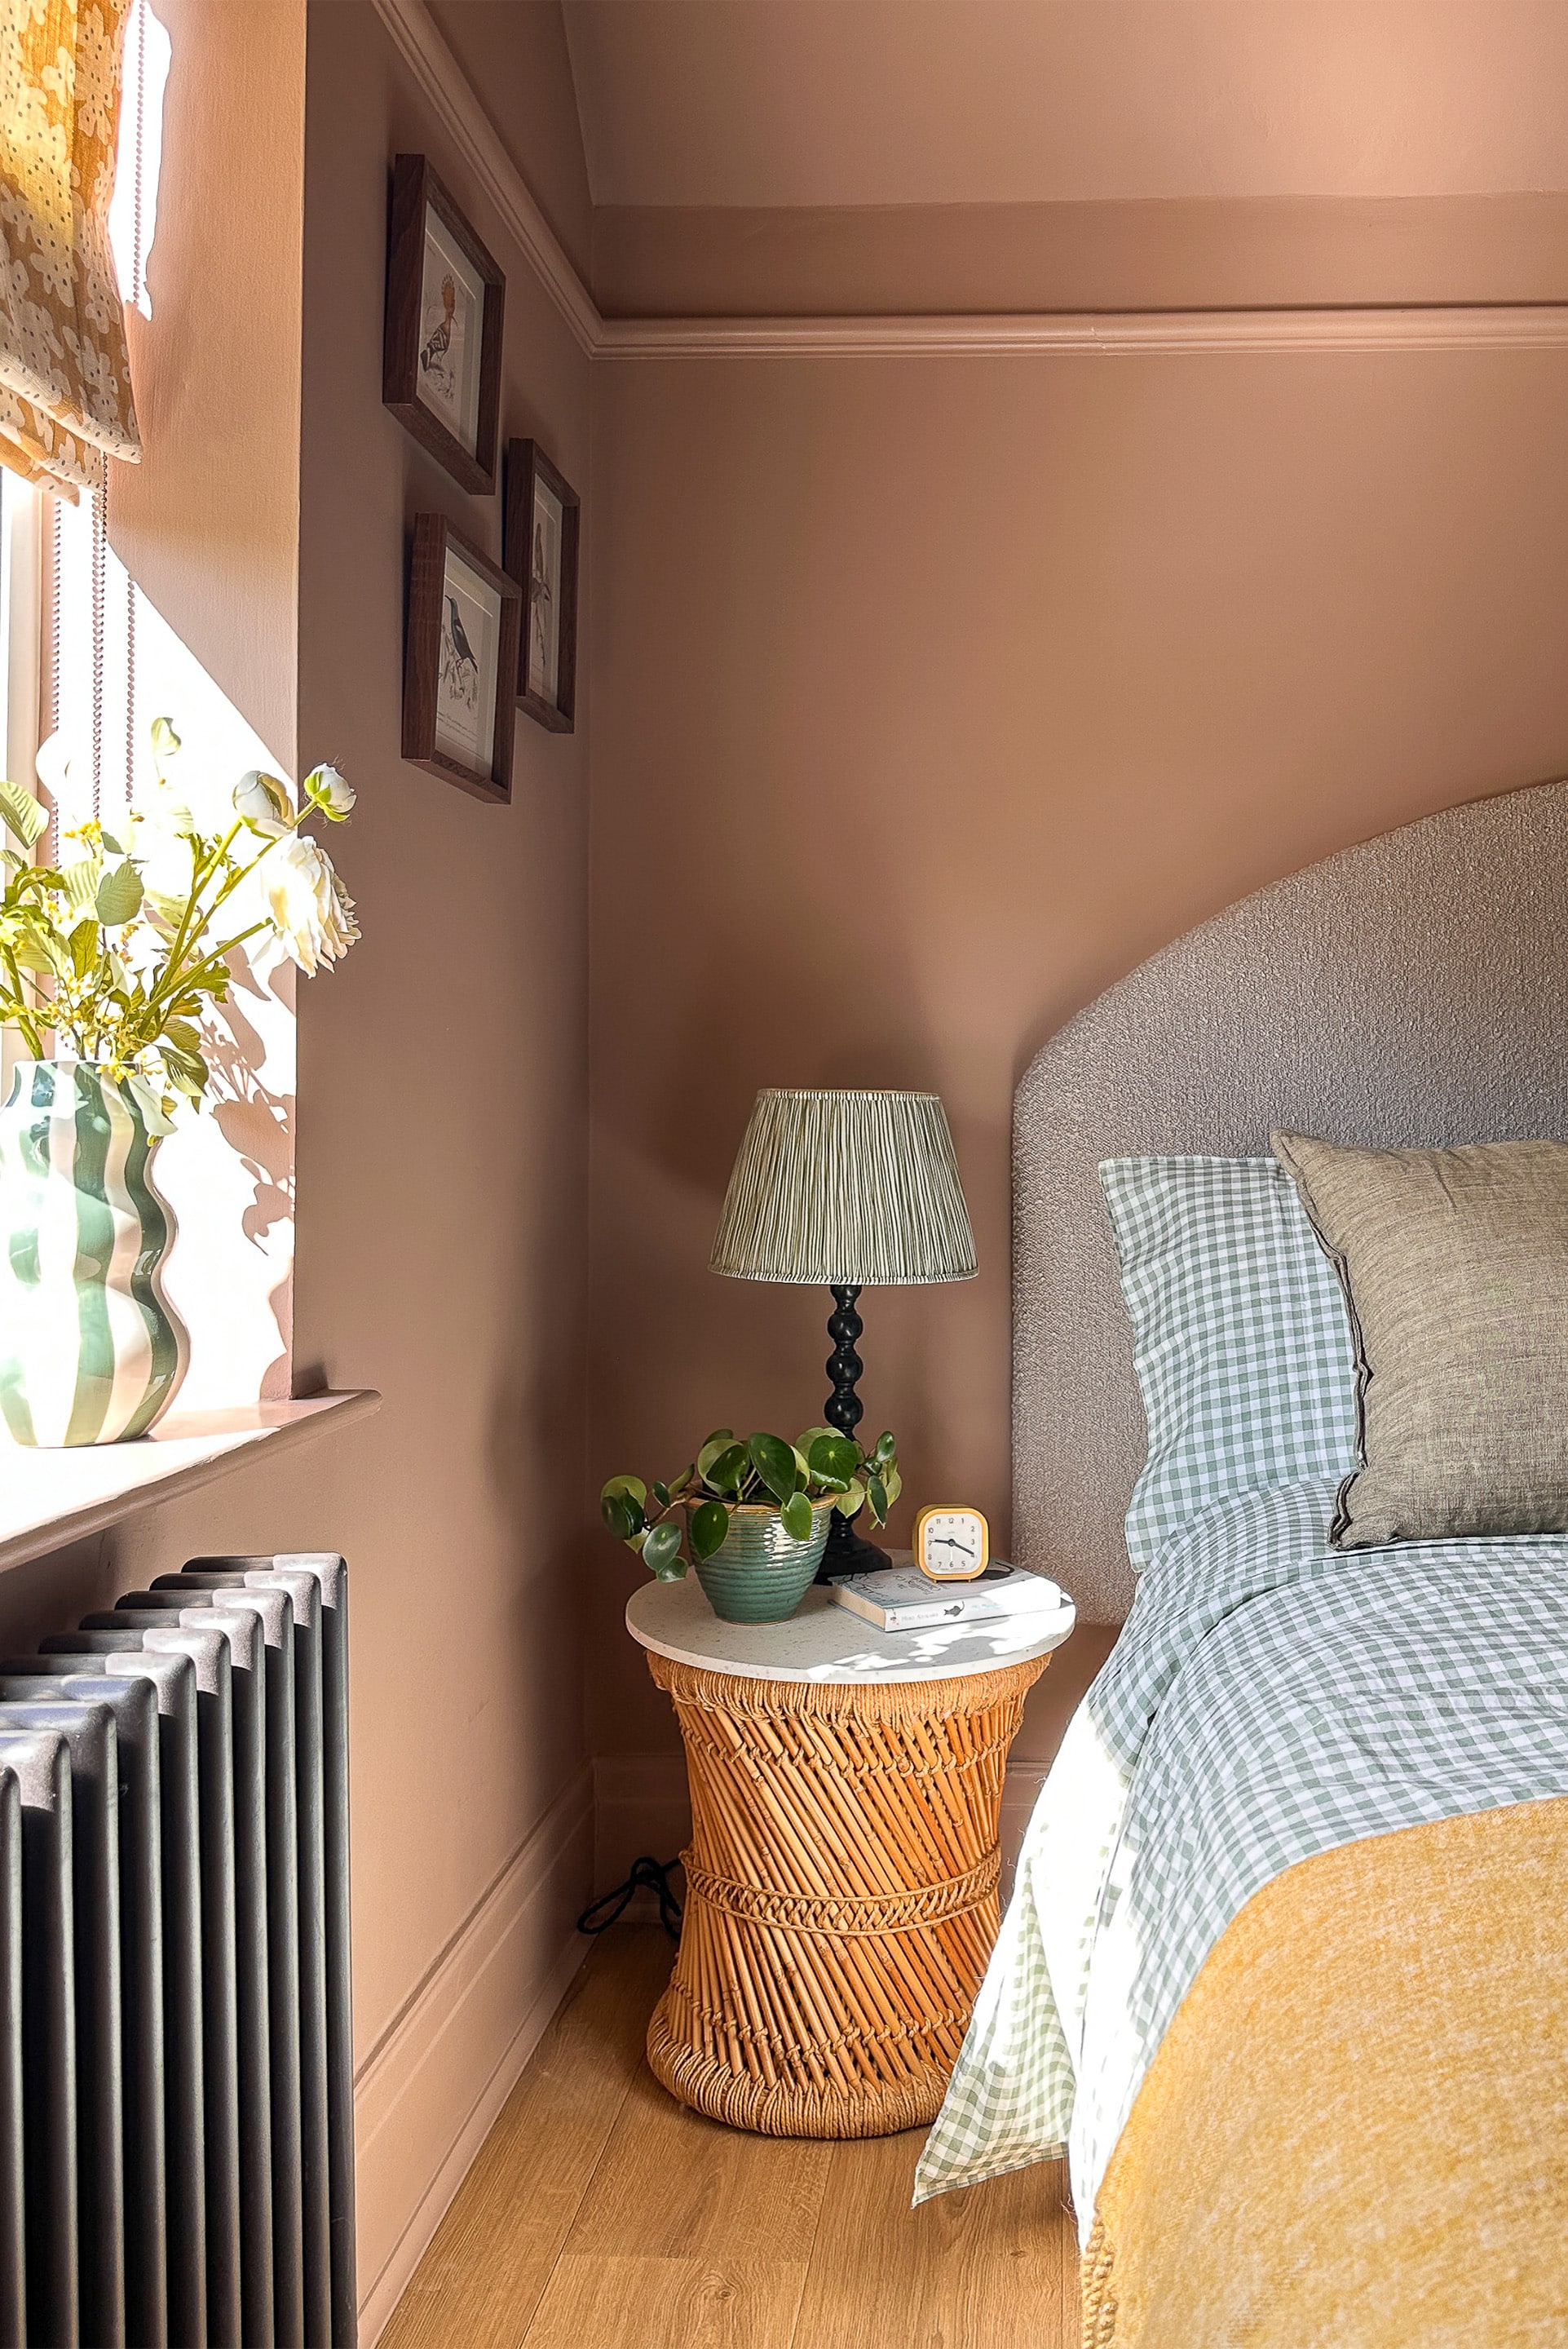 A warm caramel pink bedroom transformation